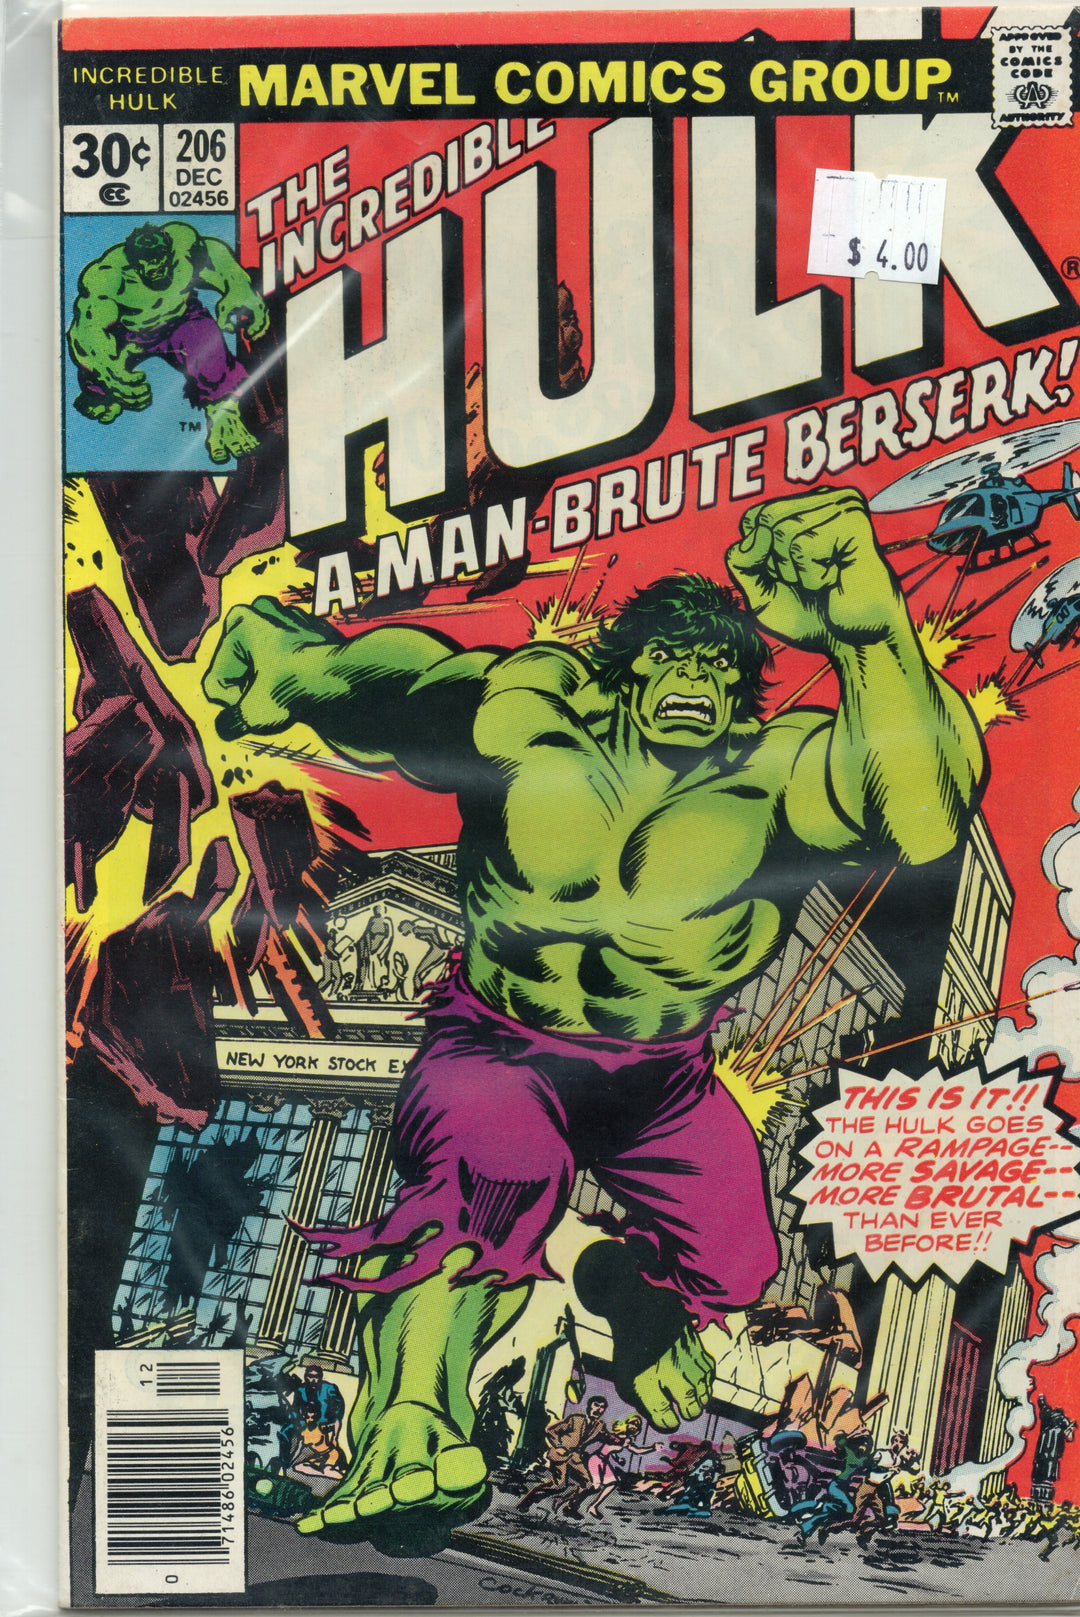 The Incredible Hulk #206